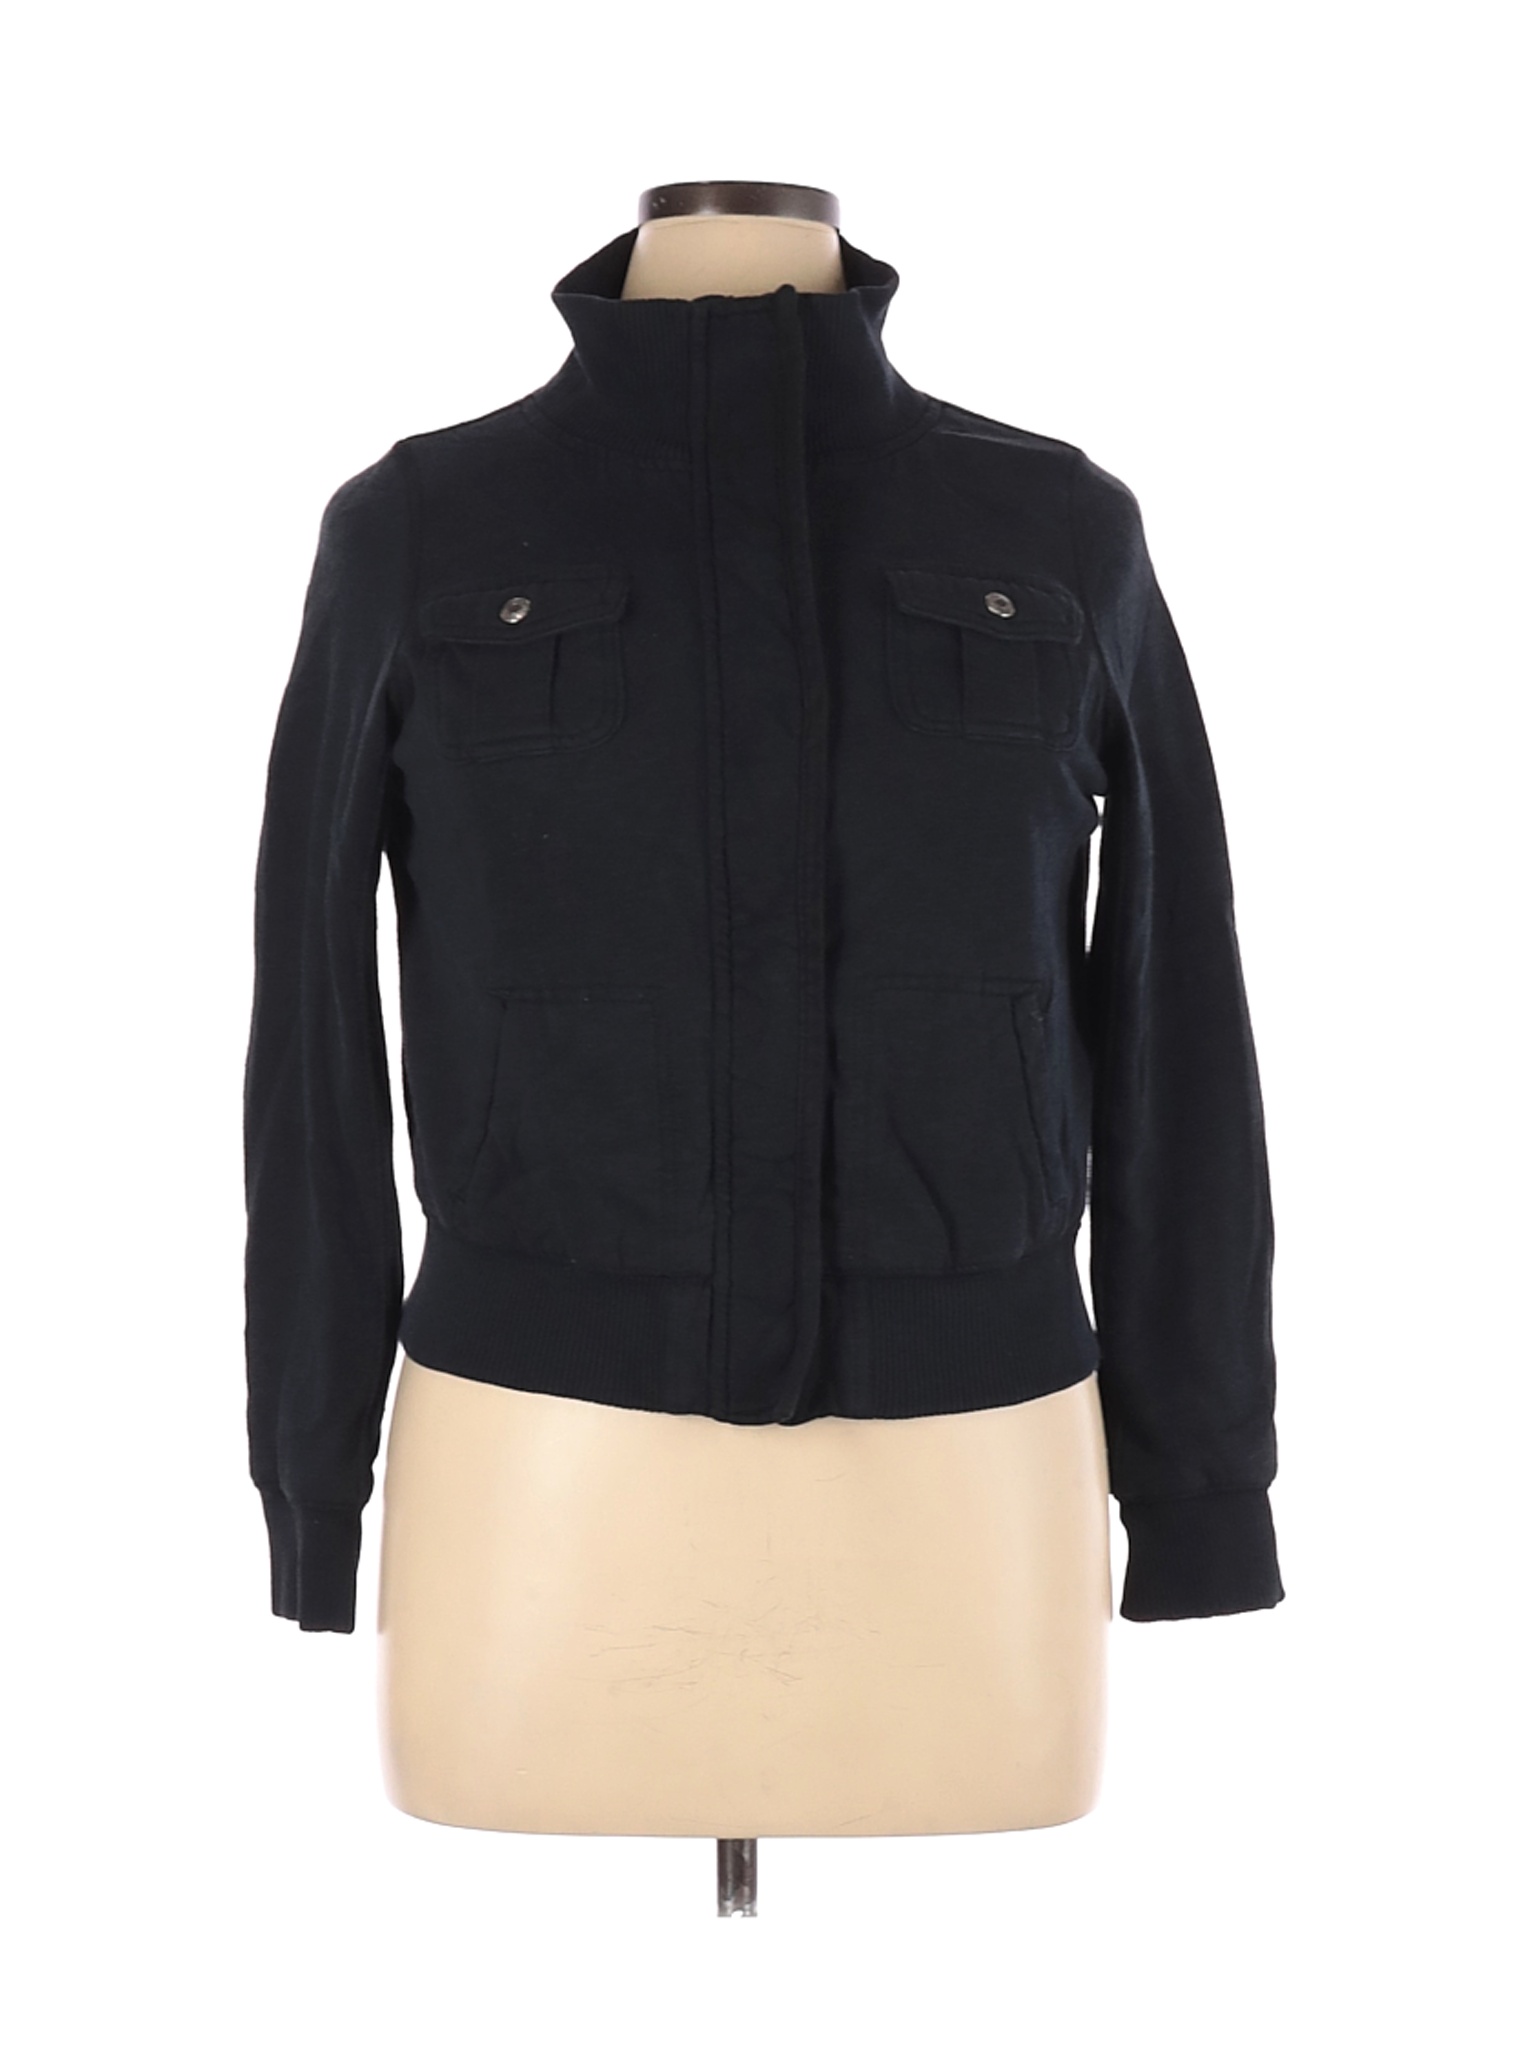 Aeropostale Women Black Jacket XL | eBay